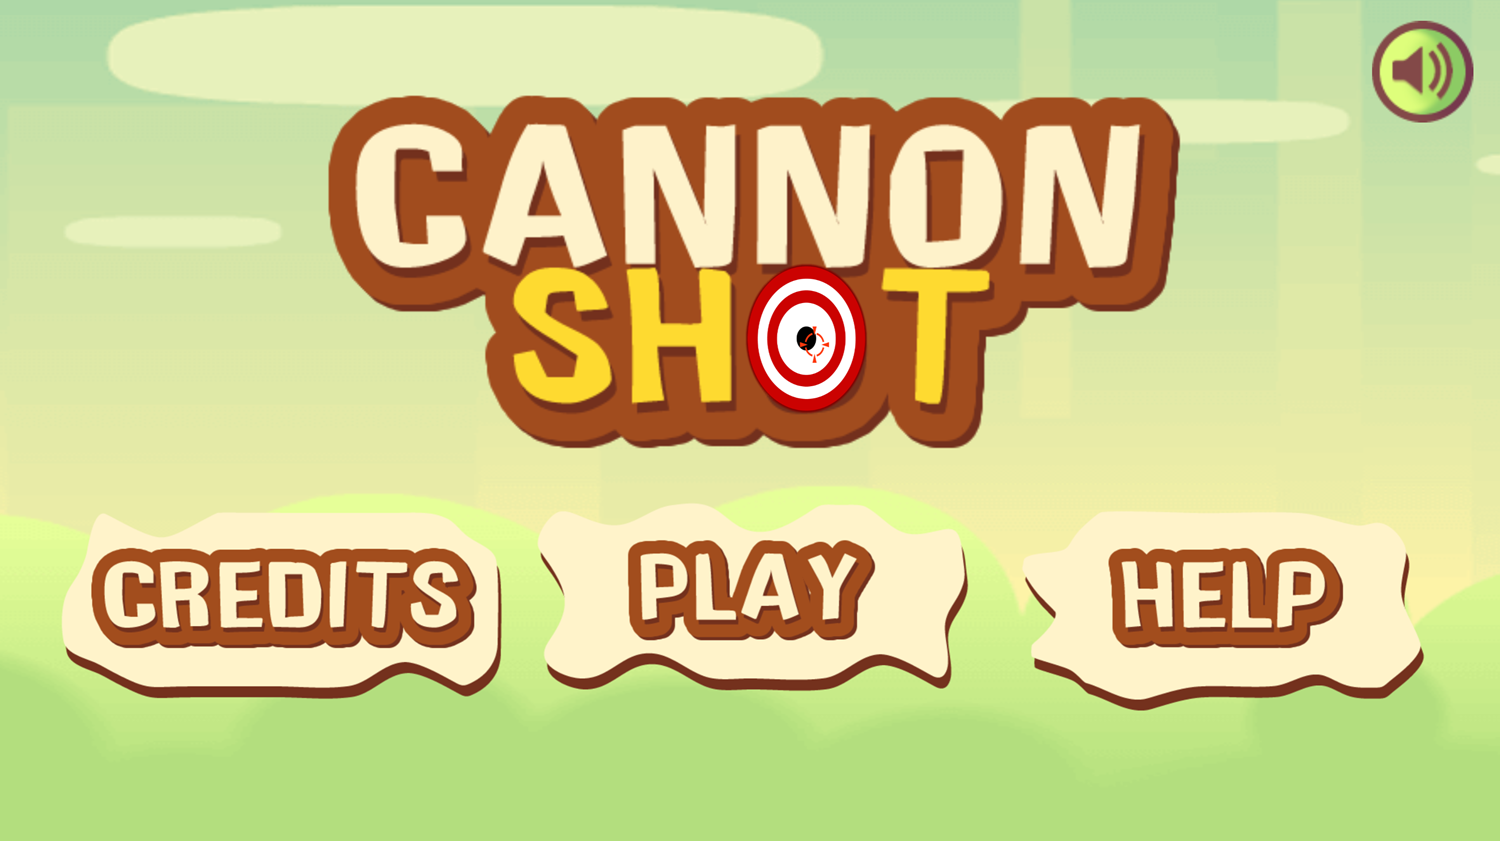 Cannon Shot Game Welcome Screen Screenshot.